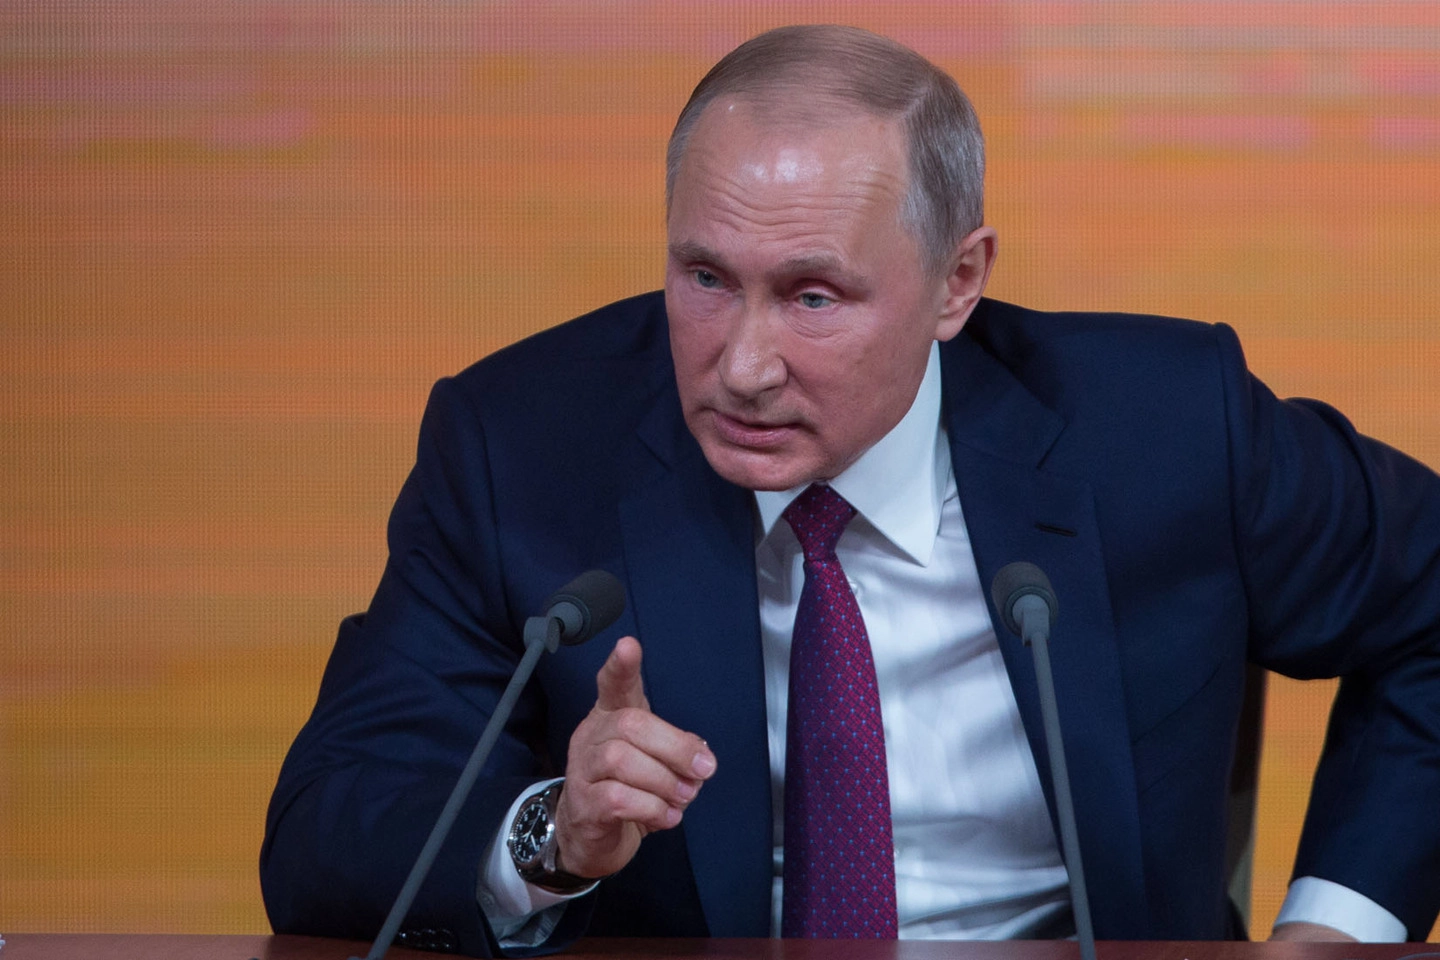 Putin in conferenza stampa (Lapresse)